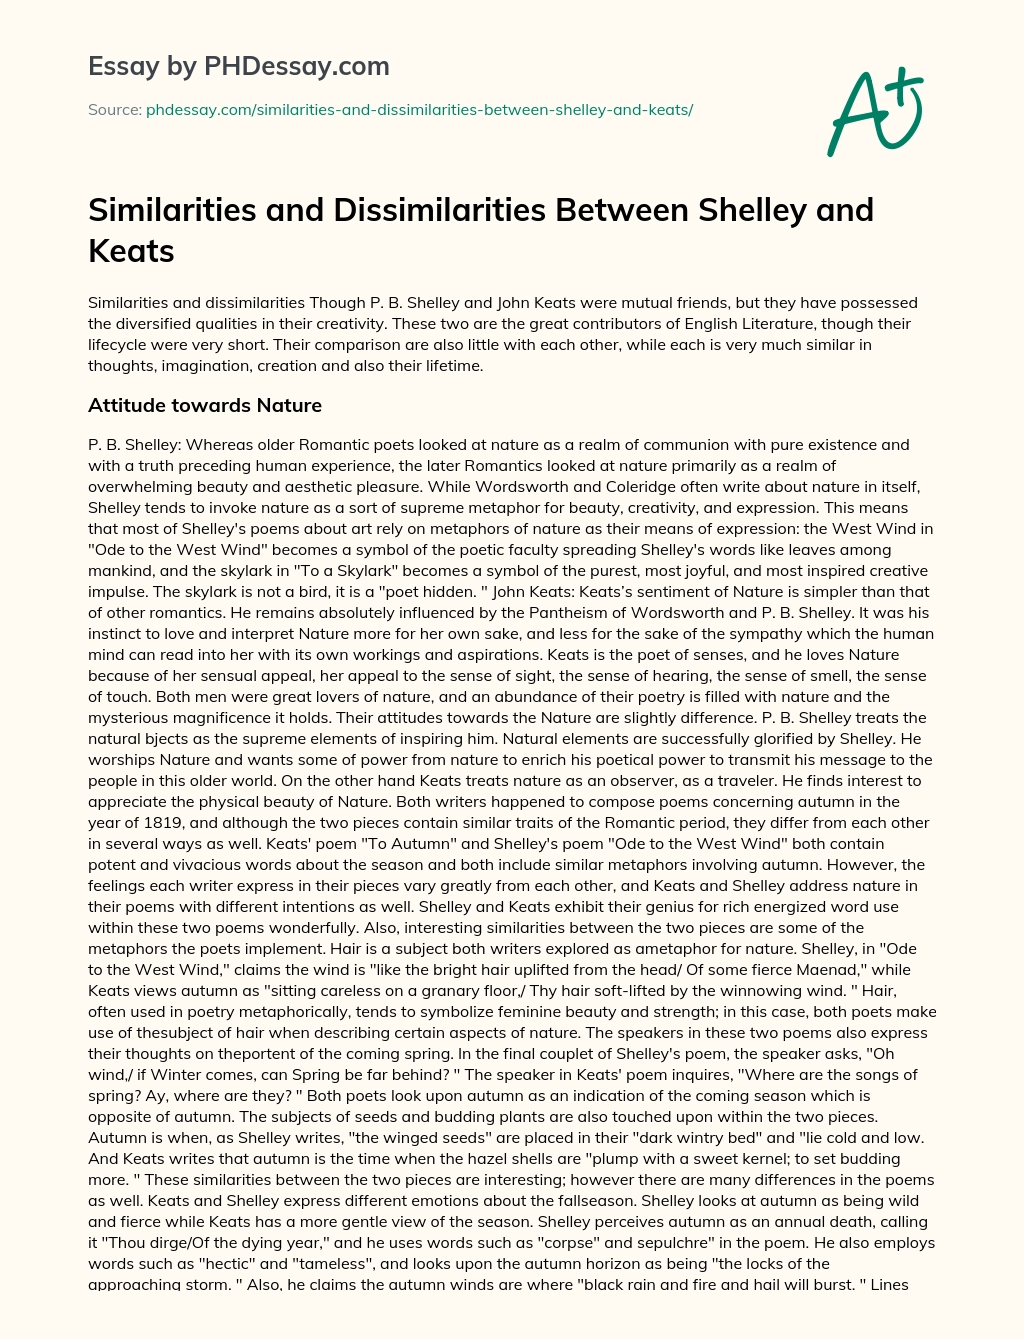 Similarities and Dissimilarities Between Shelley and Keats essay